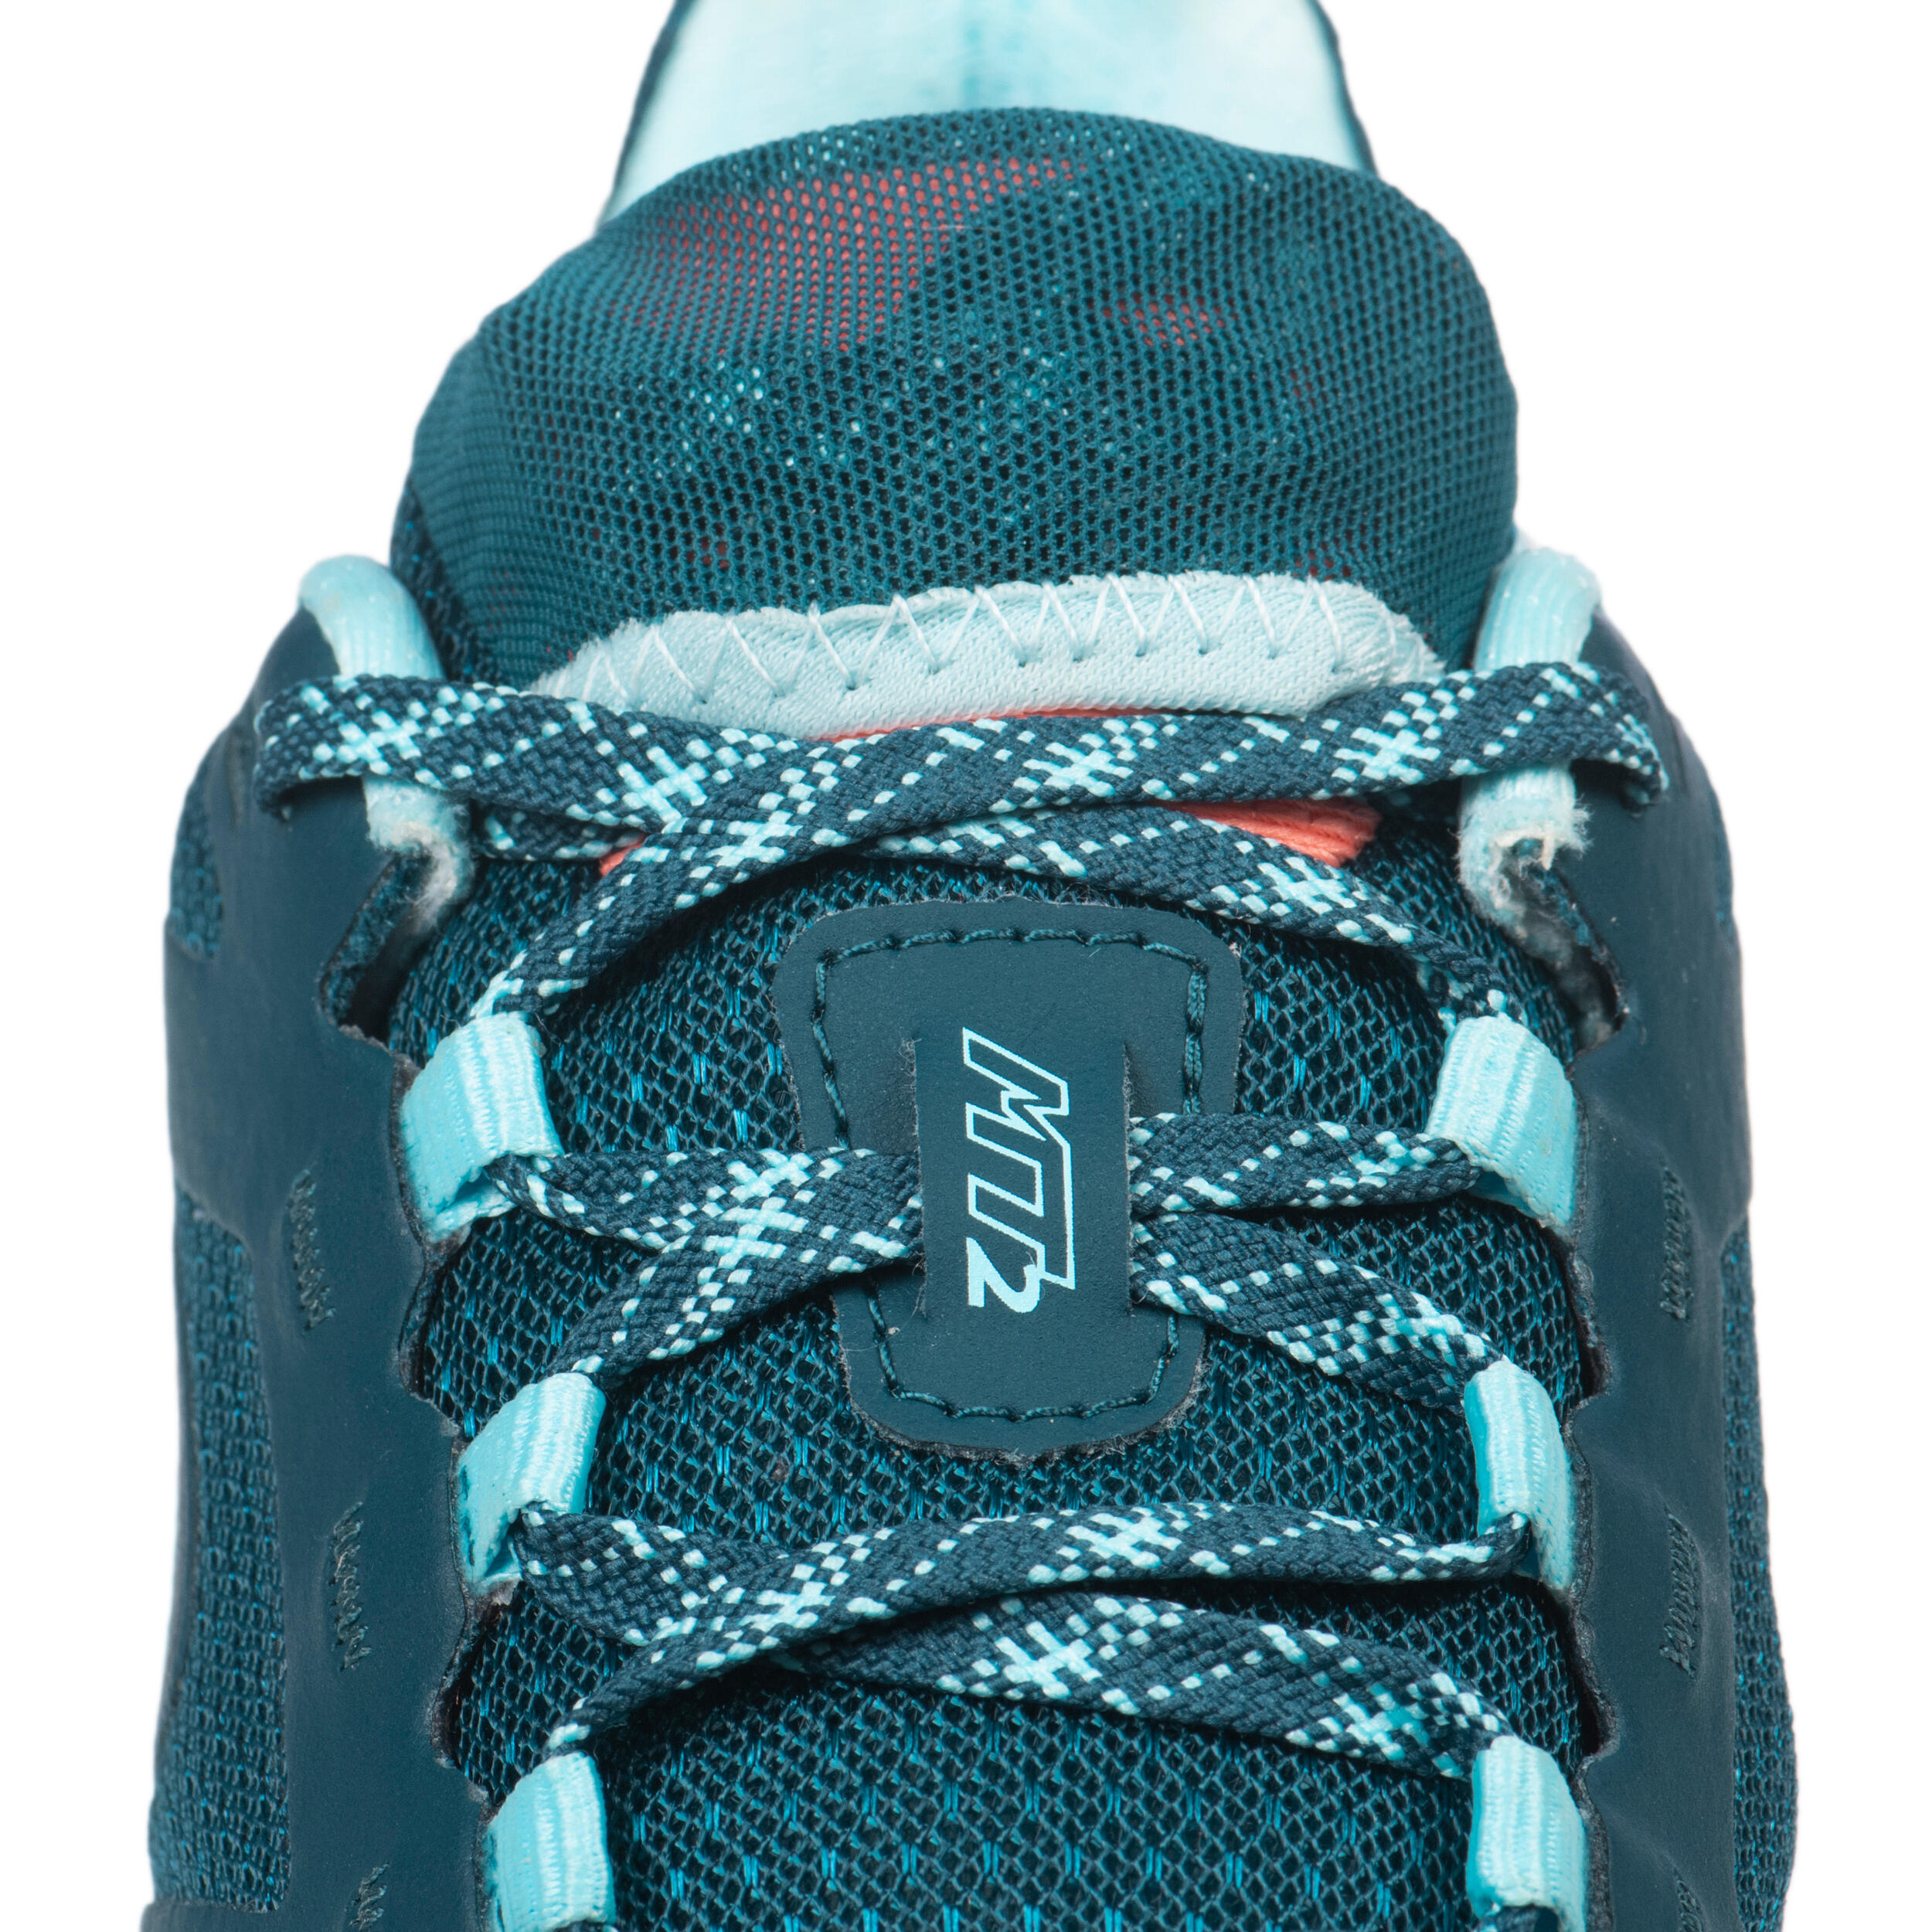 MT 2 Women's Trail Running Shoes - Dark Blue/Light Blue 8/8